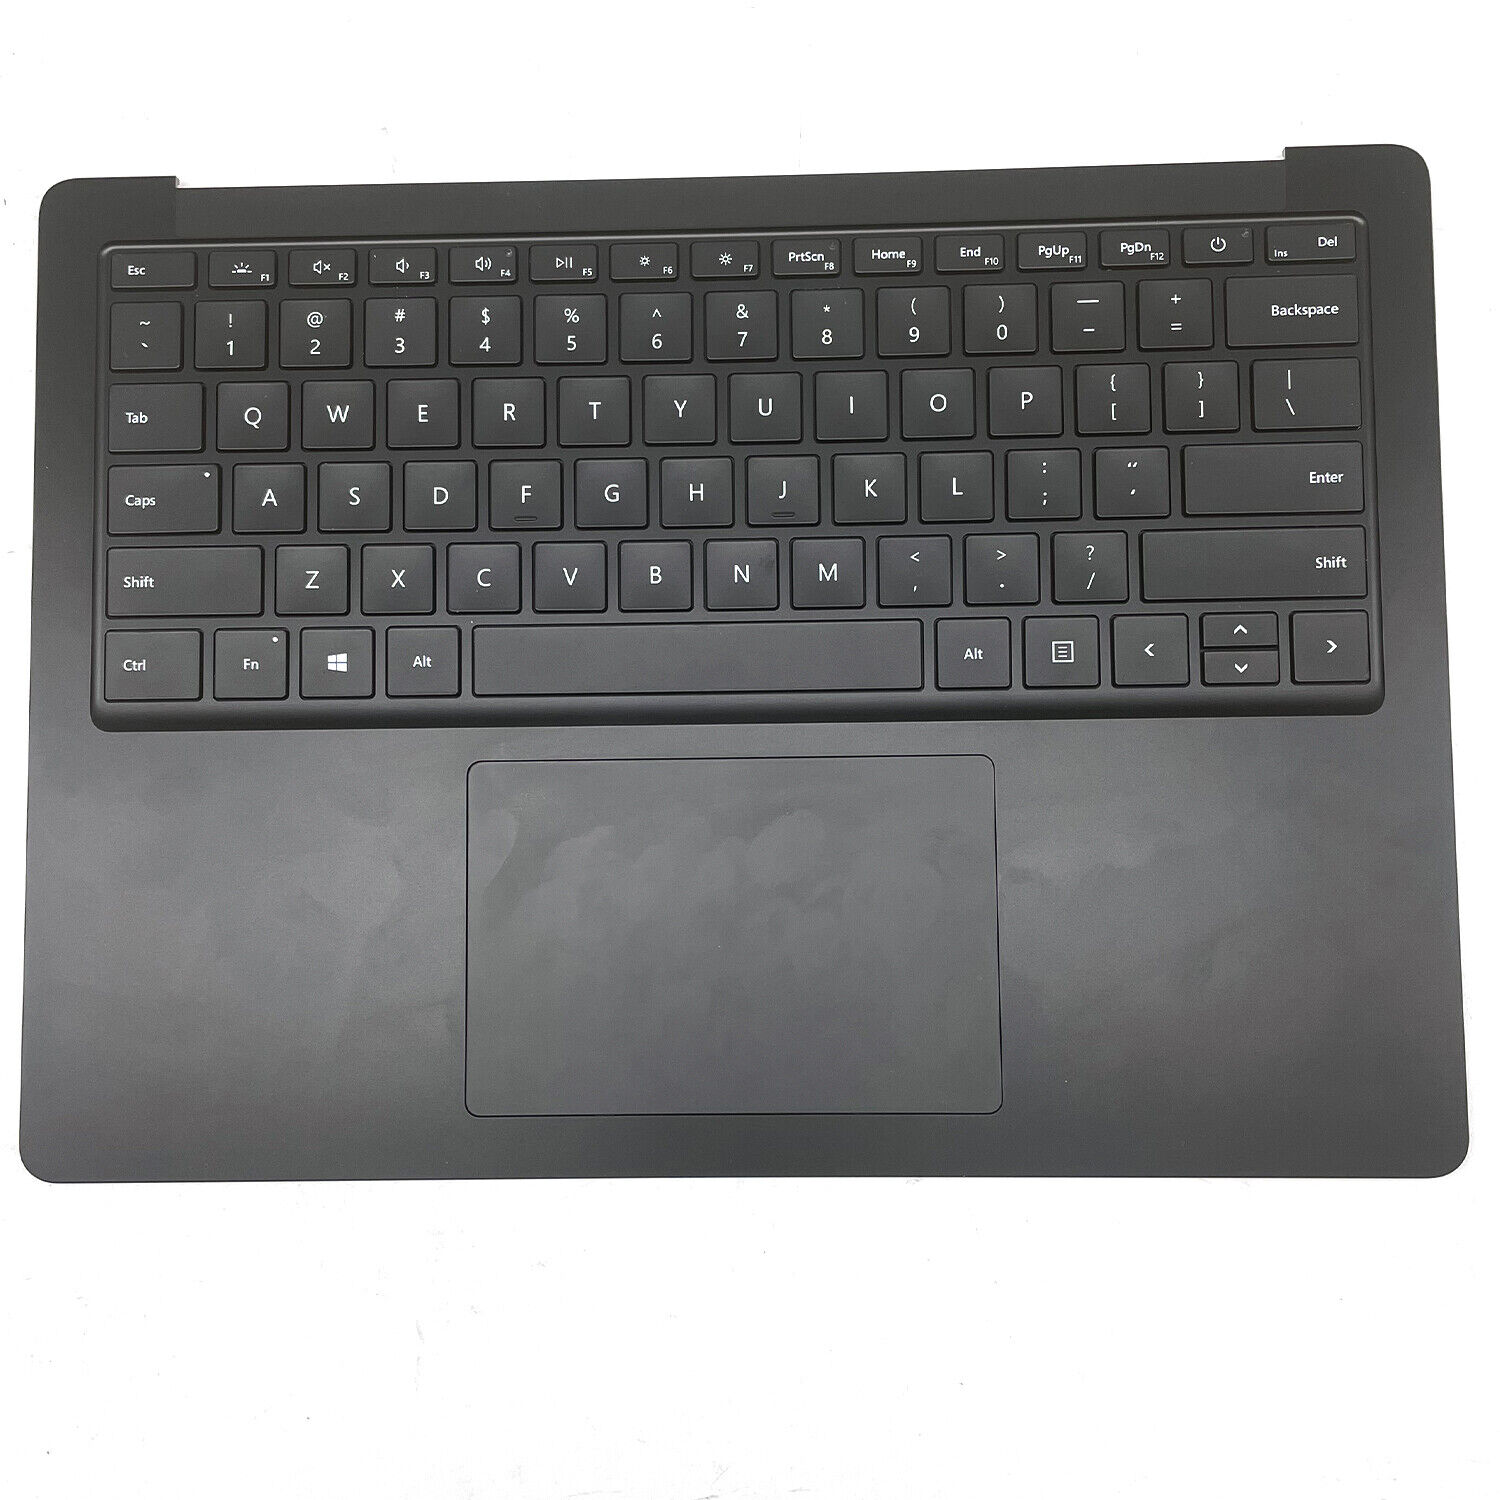 Black Palmrest Backlit Keyboard Touchpad For Microsoft Surface 3/4 13.5